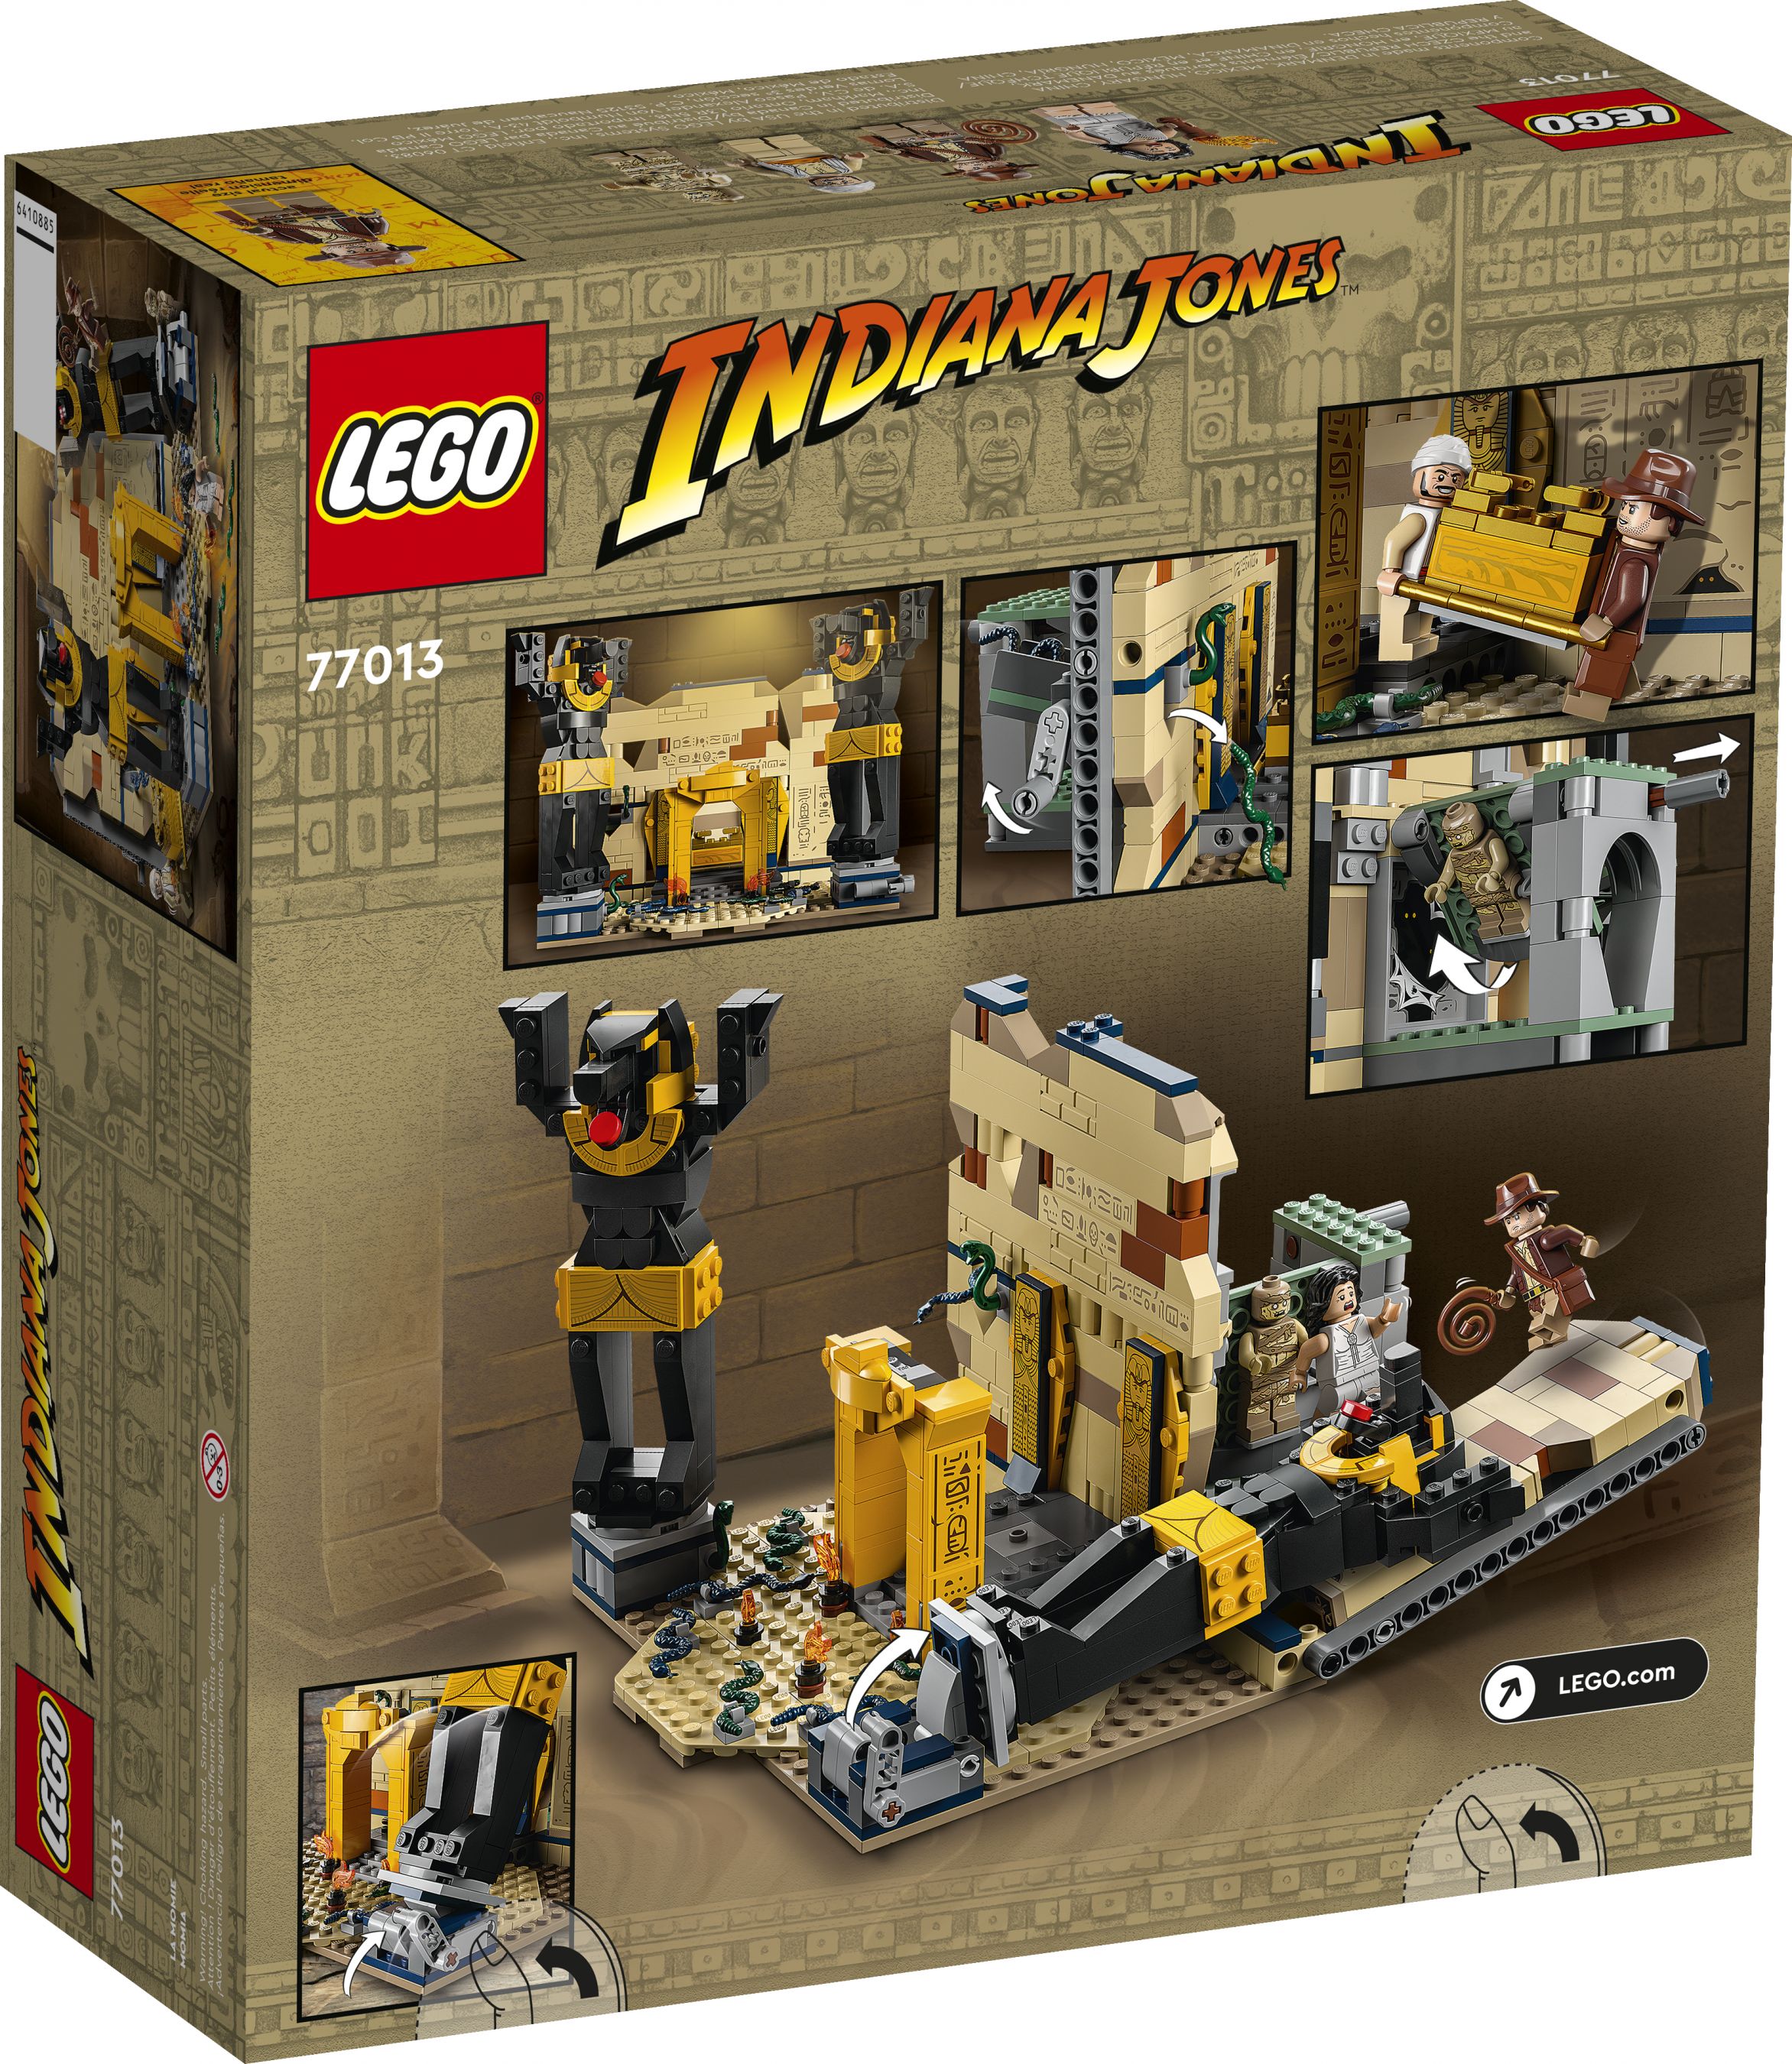 LEGO Indiana Jones 77013 Flucht aus dem Grabmal LEGO_77013_Box5_v39.jpg